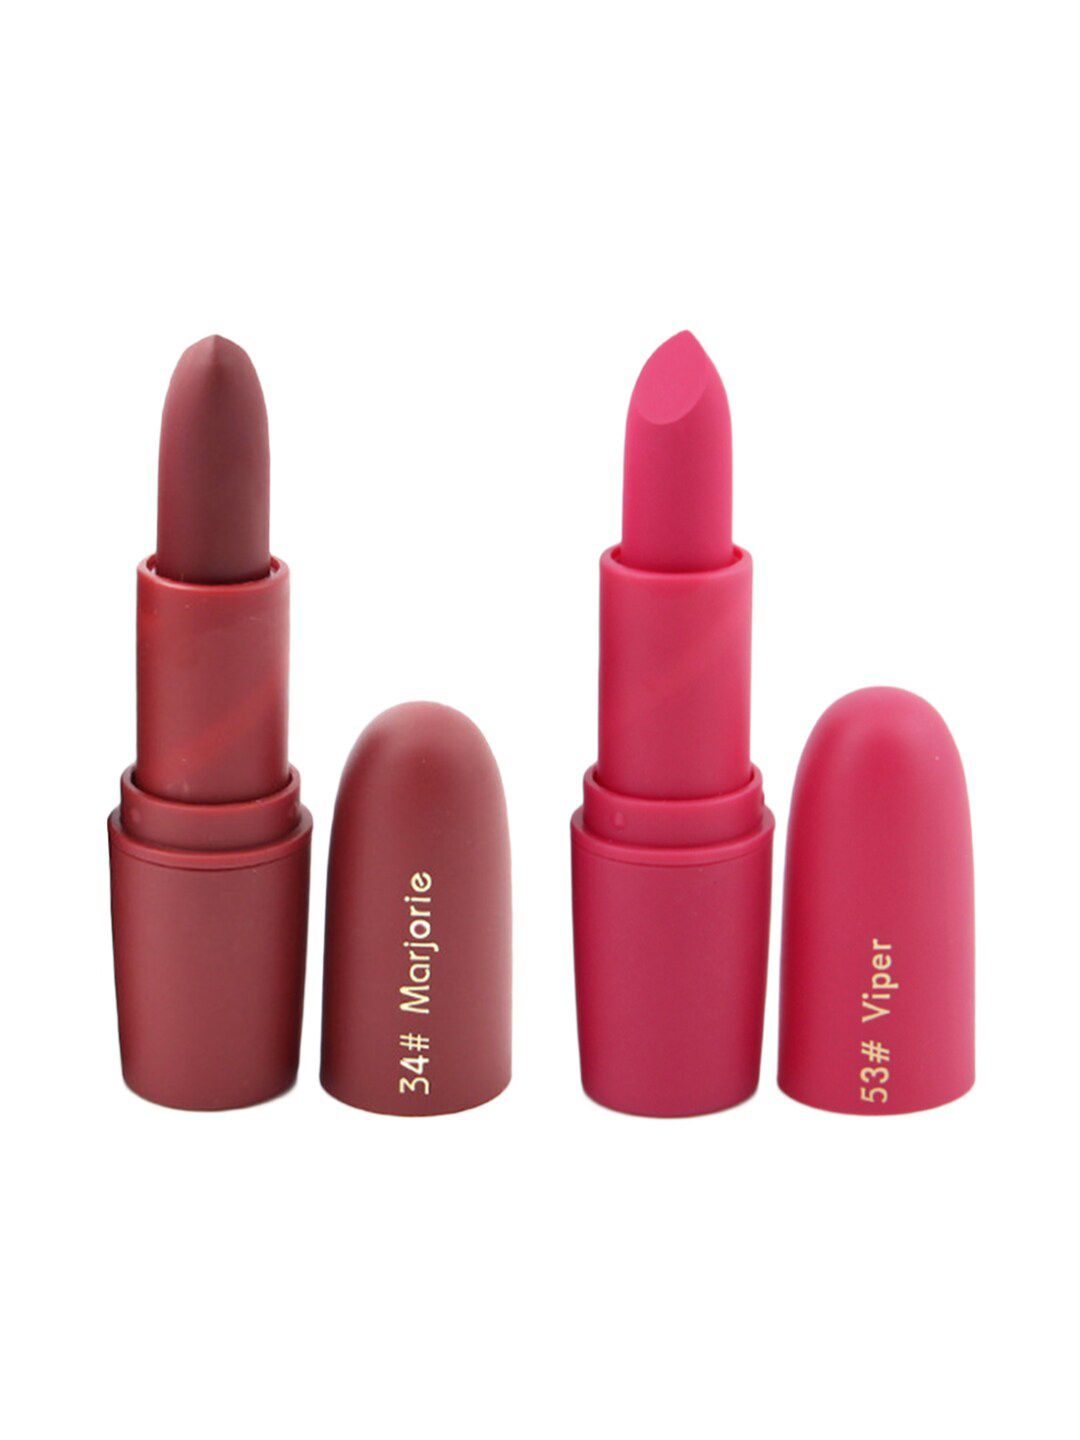 MISS ROSE Set of 2 Matte Creamy Bullet Lipsticks - 34 Marjorie & 53 Viper Price in India